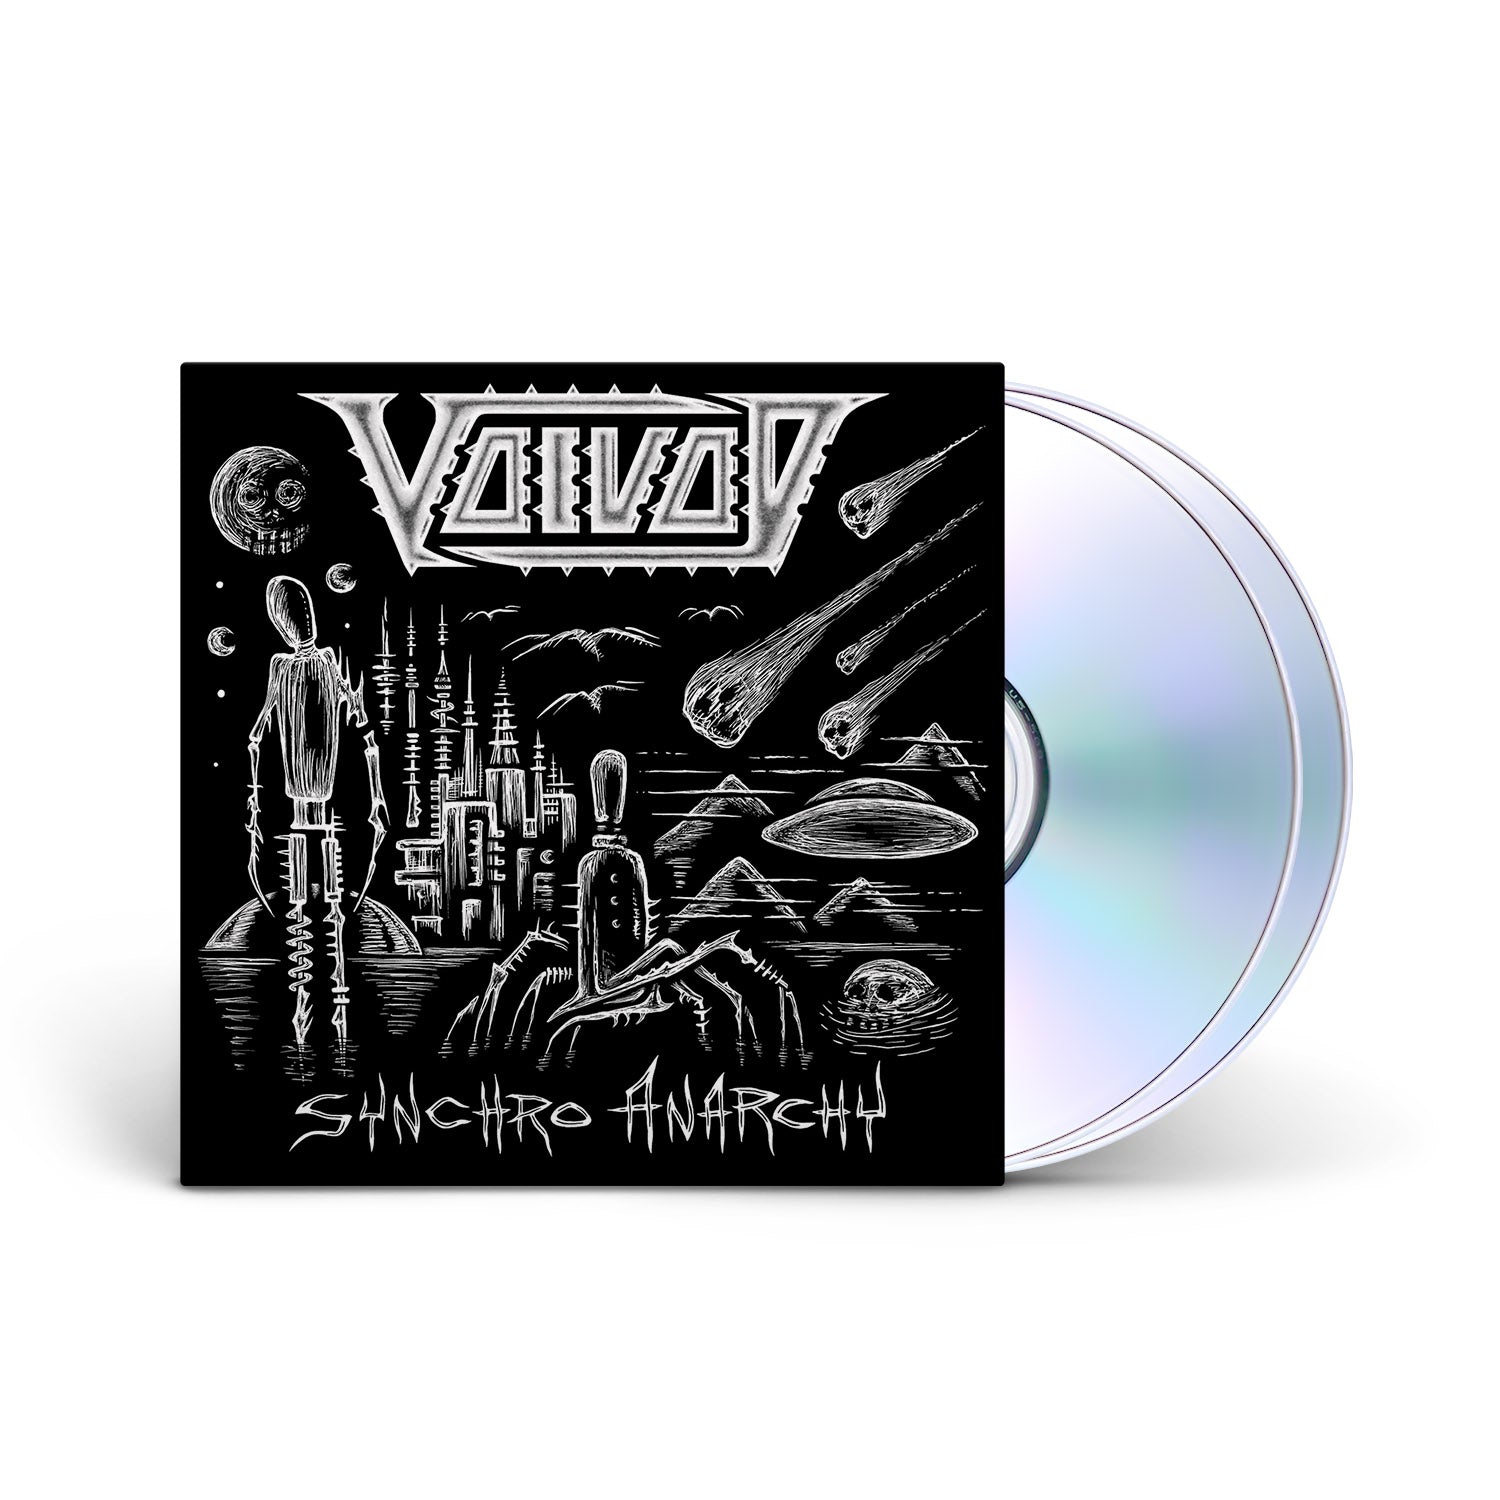 VOIVOD - Synchro Anarchy - 2CD Mediabook